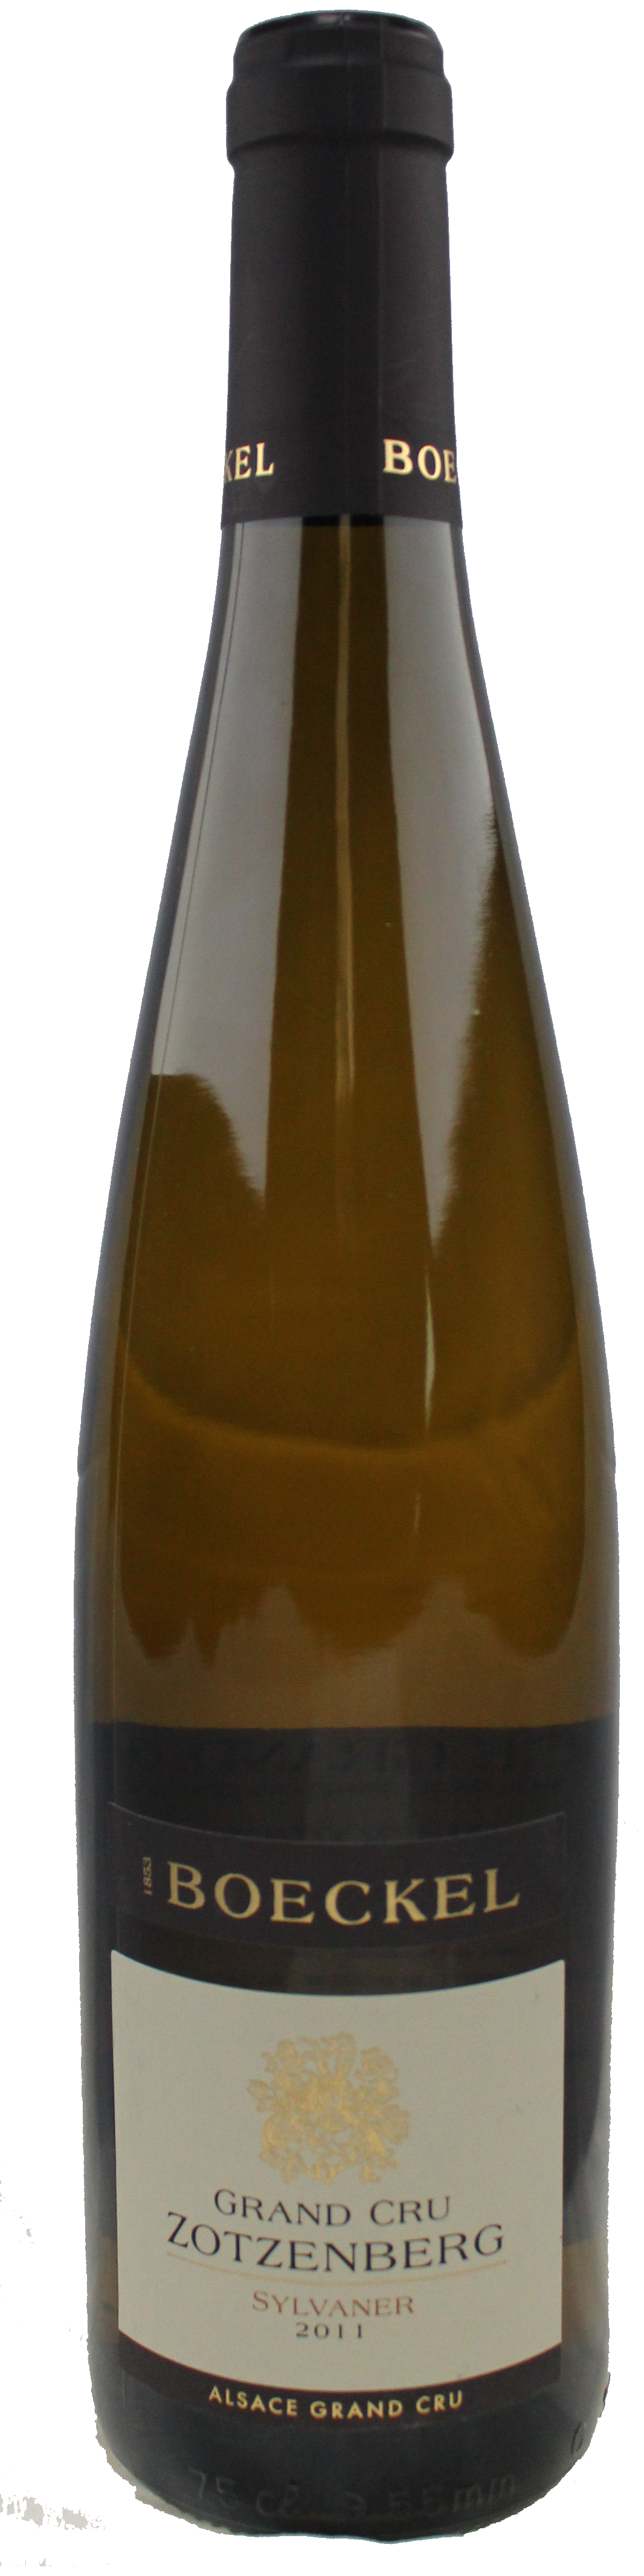 Bottle shot of 2011 Sylvaner Grand Cru Zotzenberg